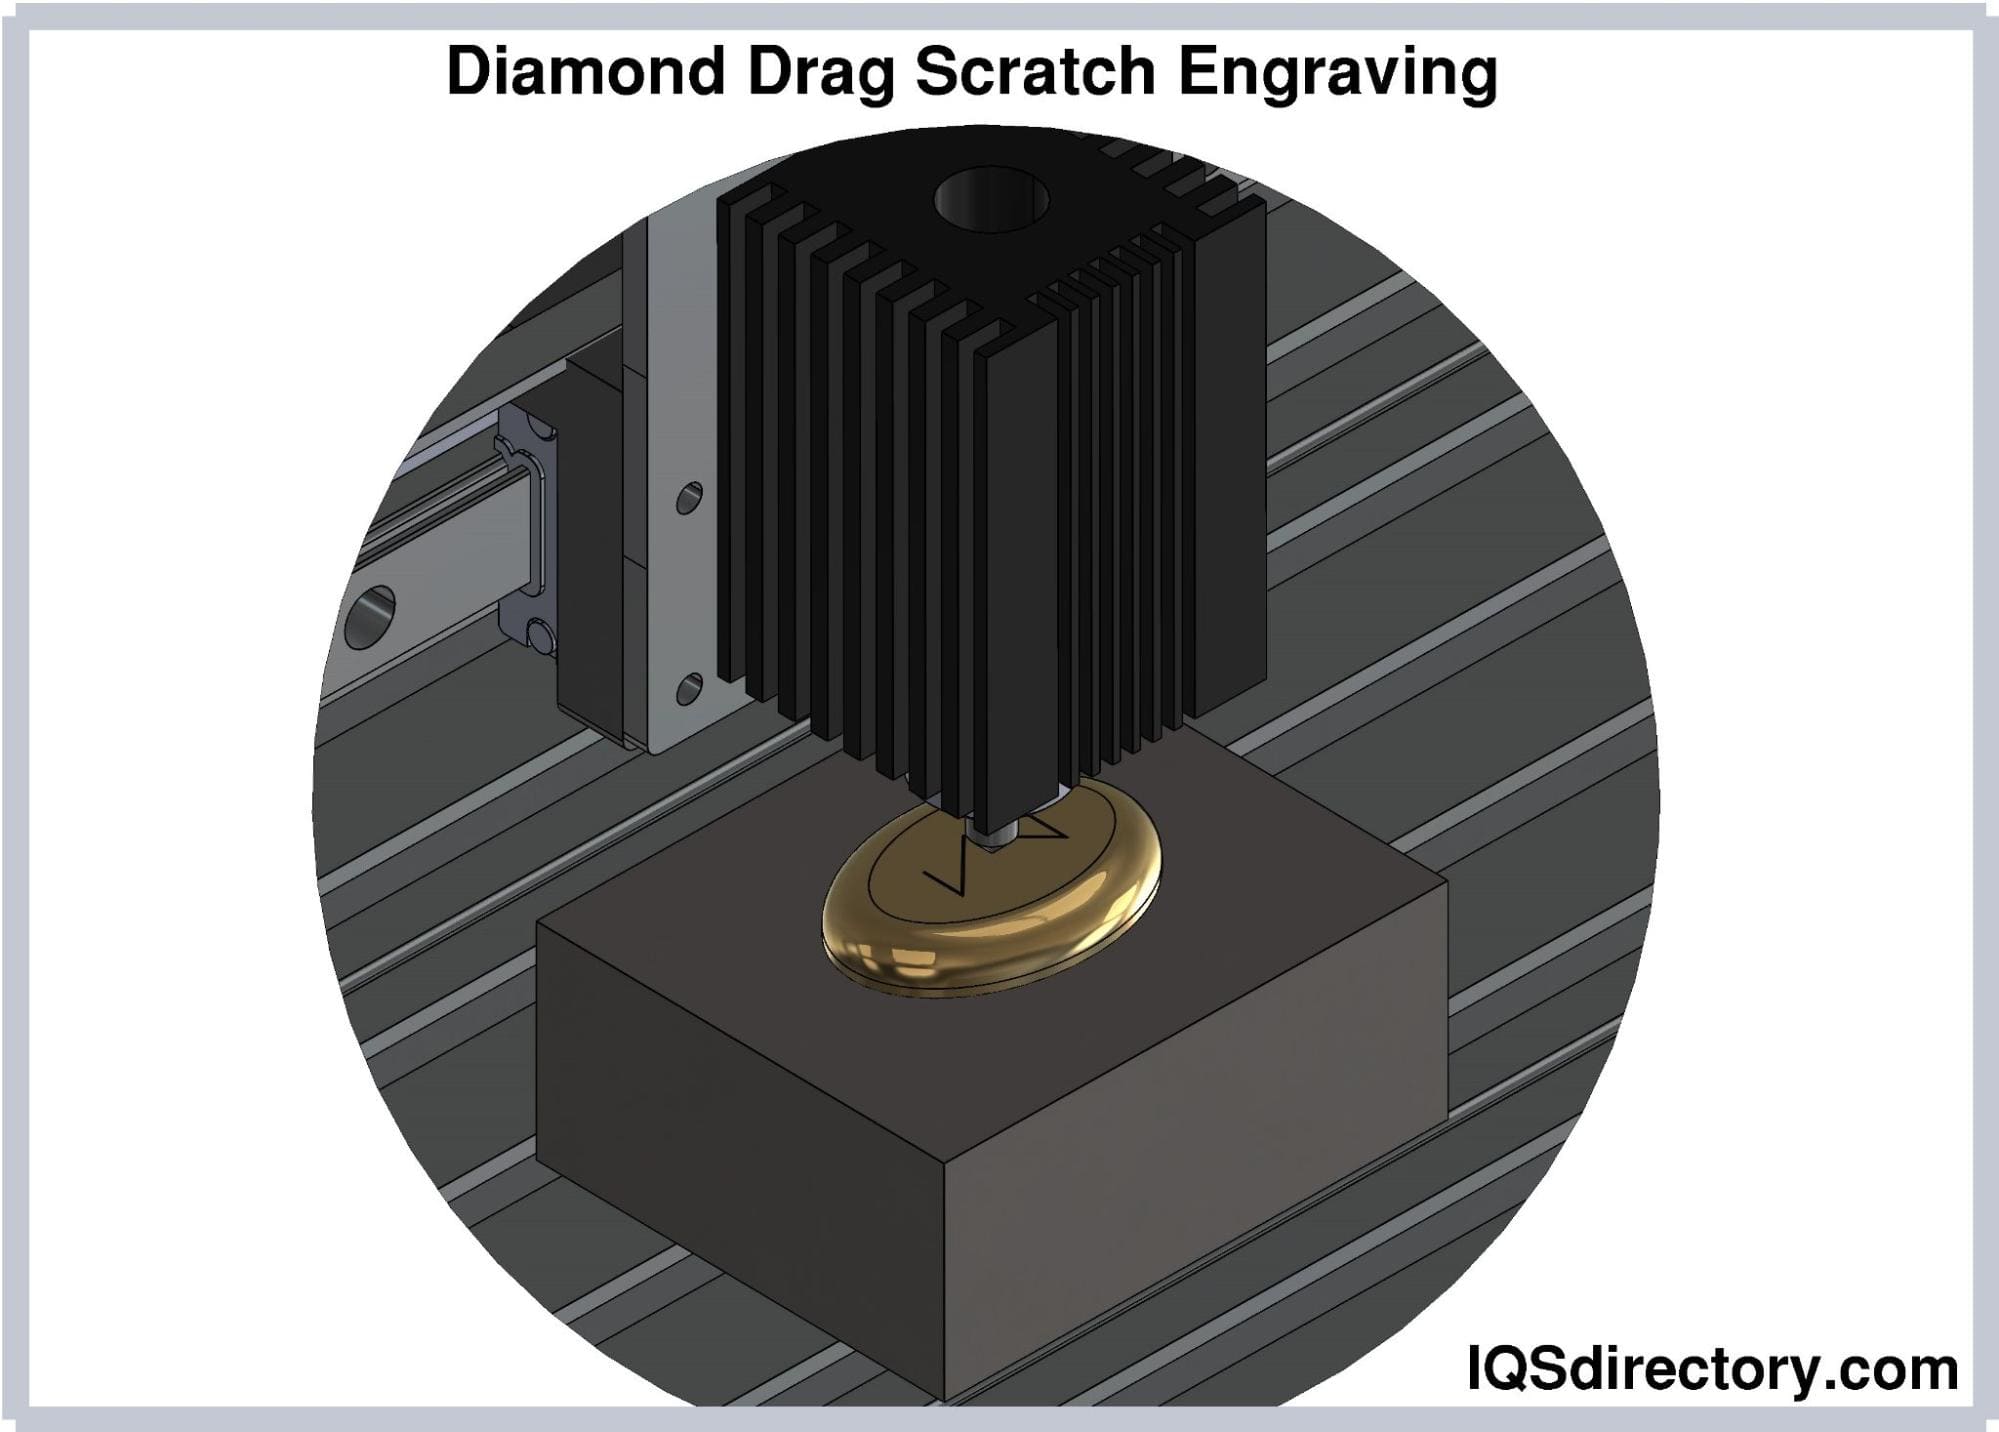 Diamond Drag Scratch Engraving